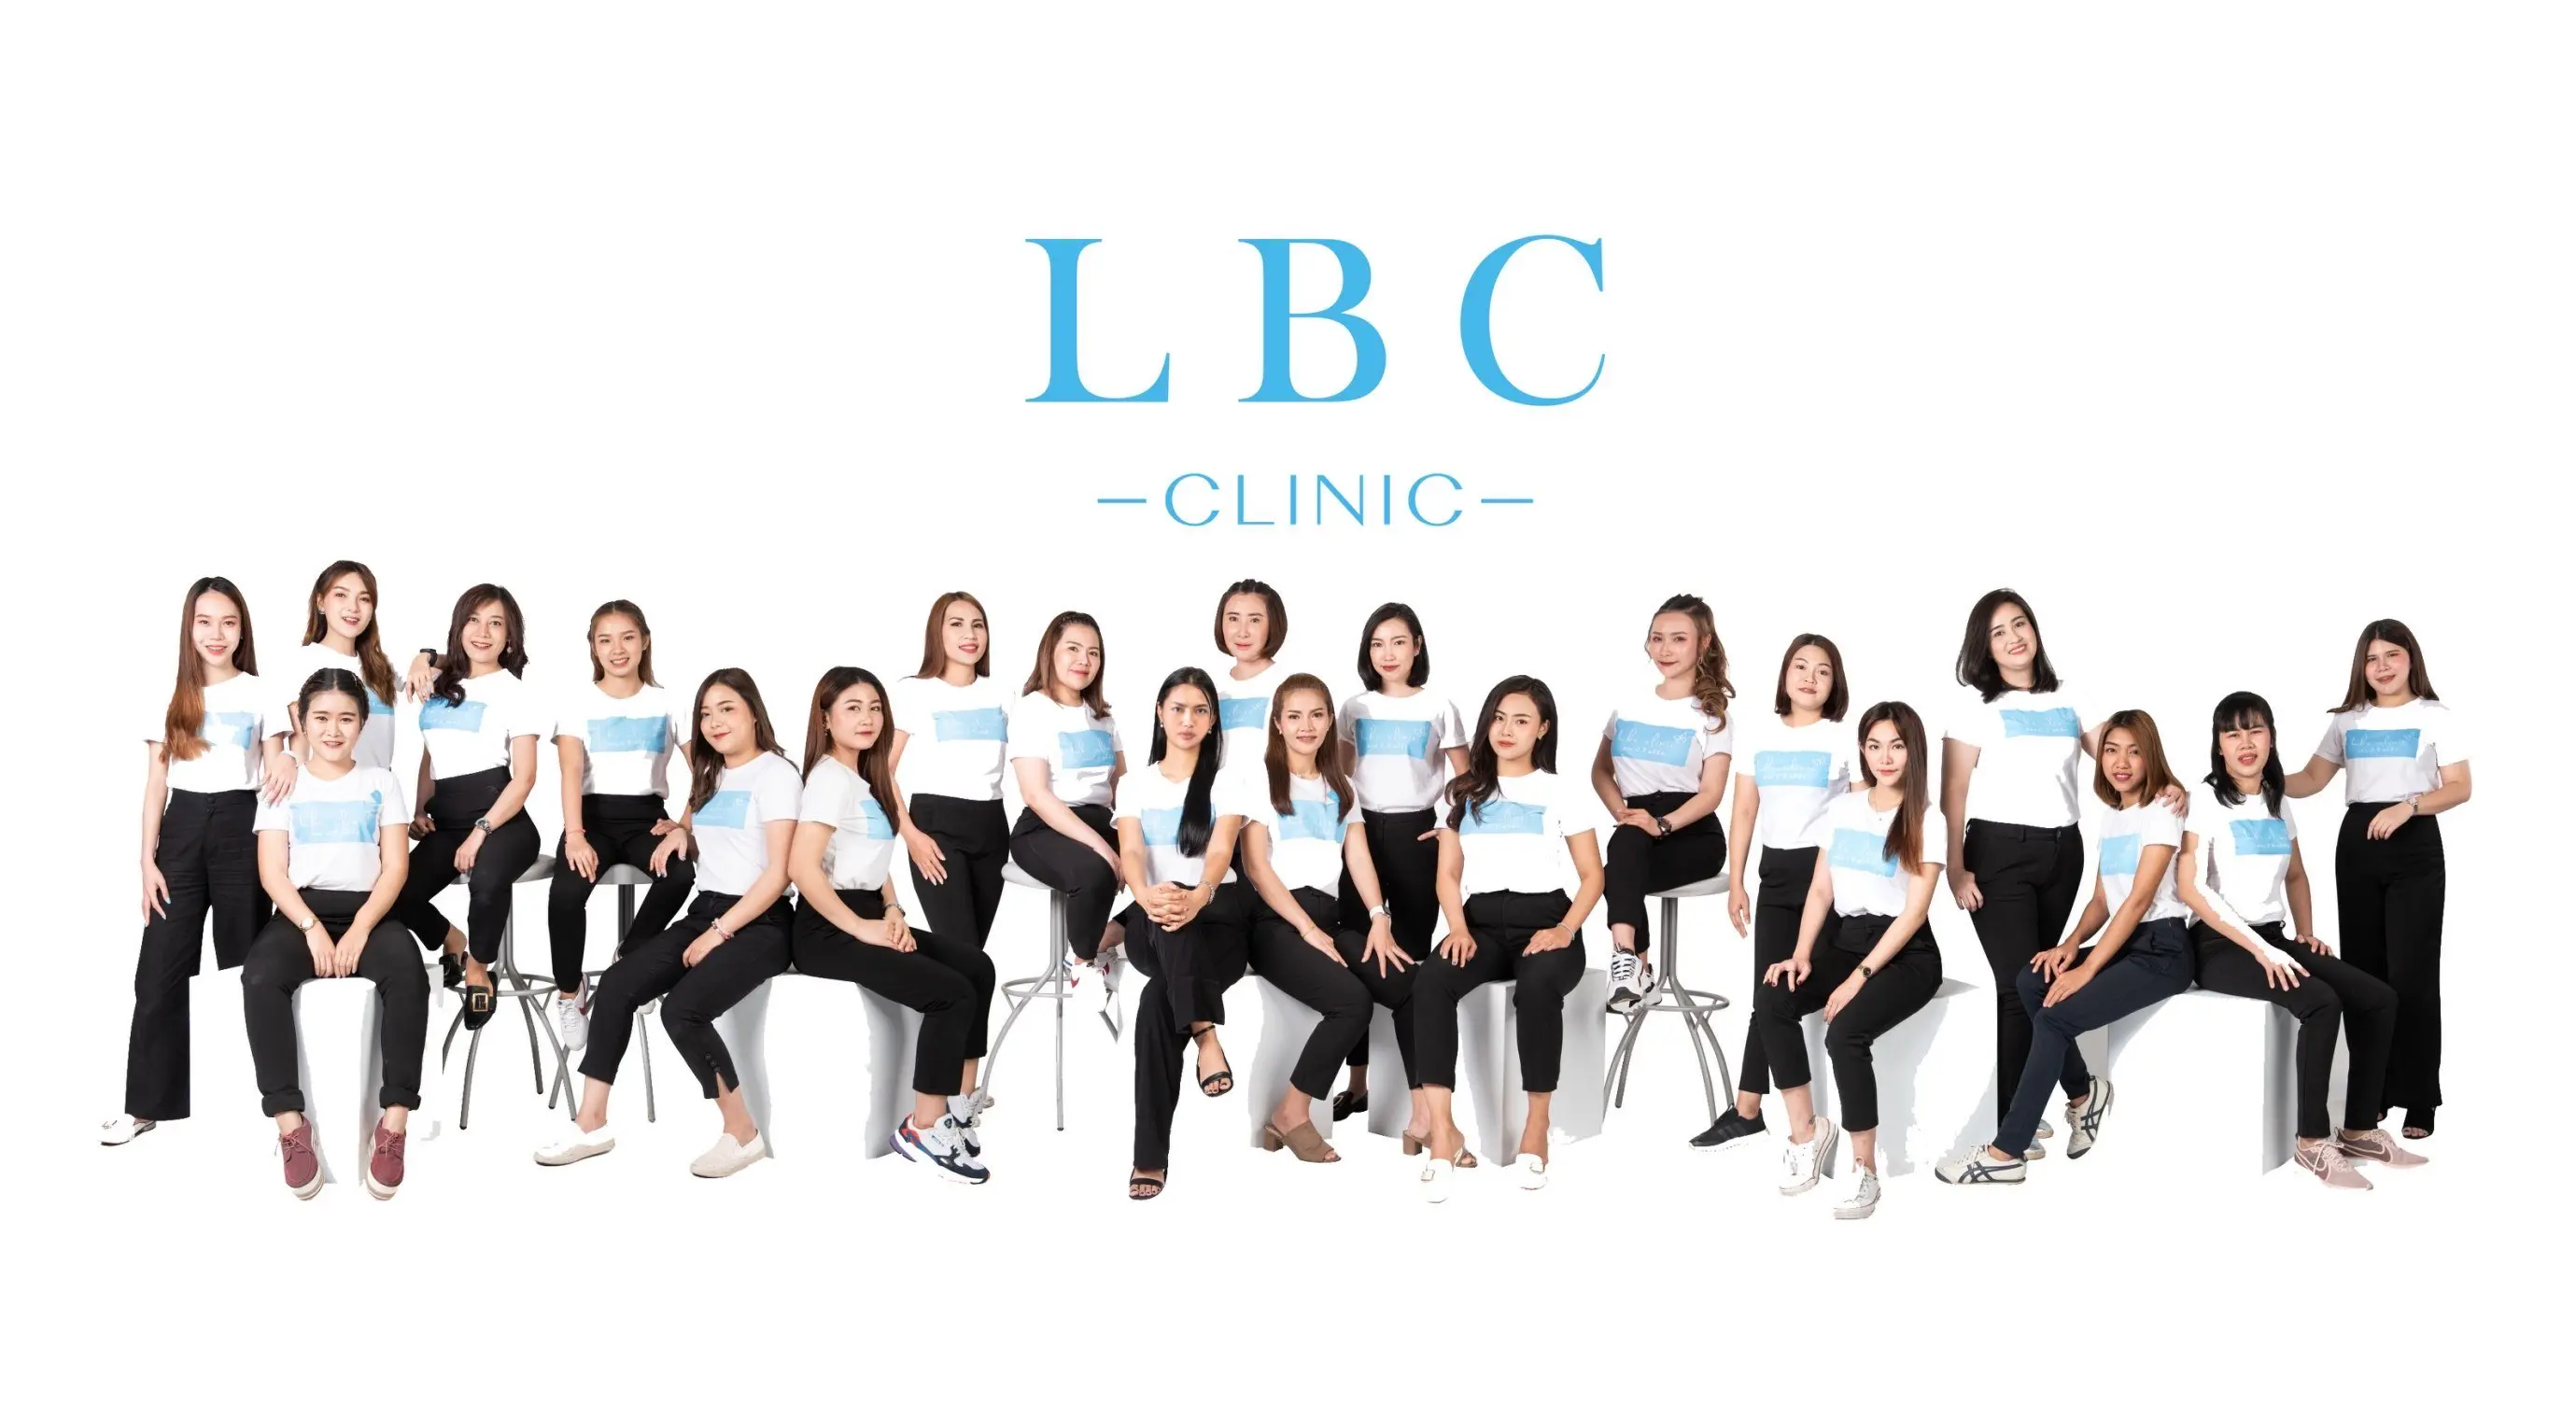 LBC CLINIC FOR INTERNATIONAL CUSTOMERS